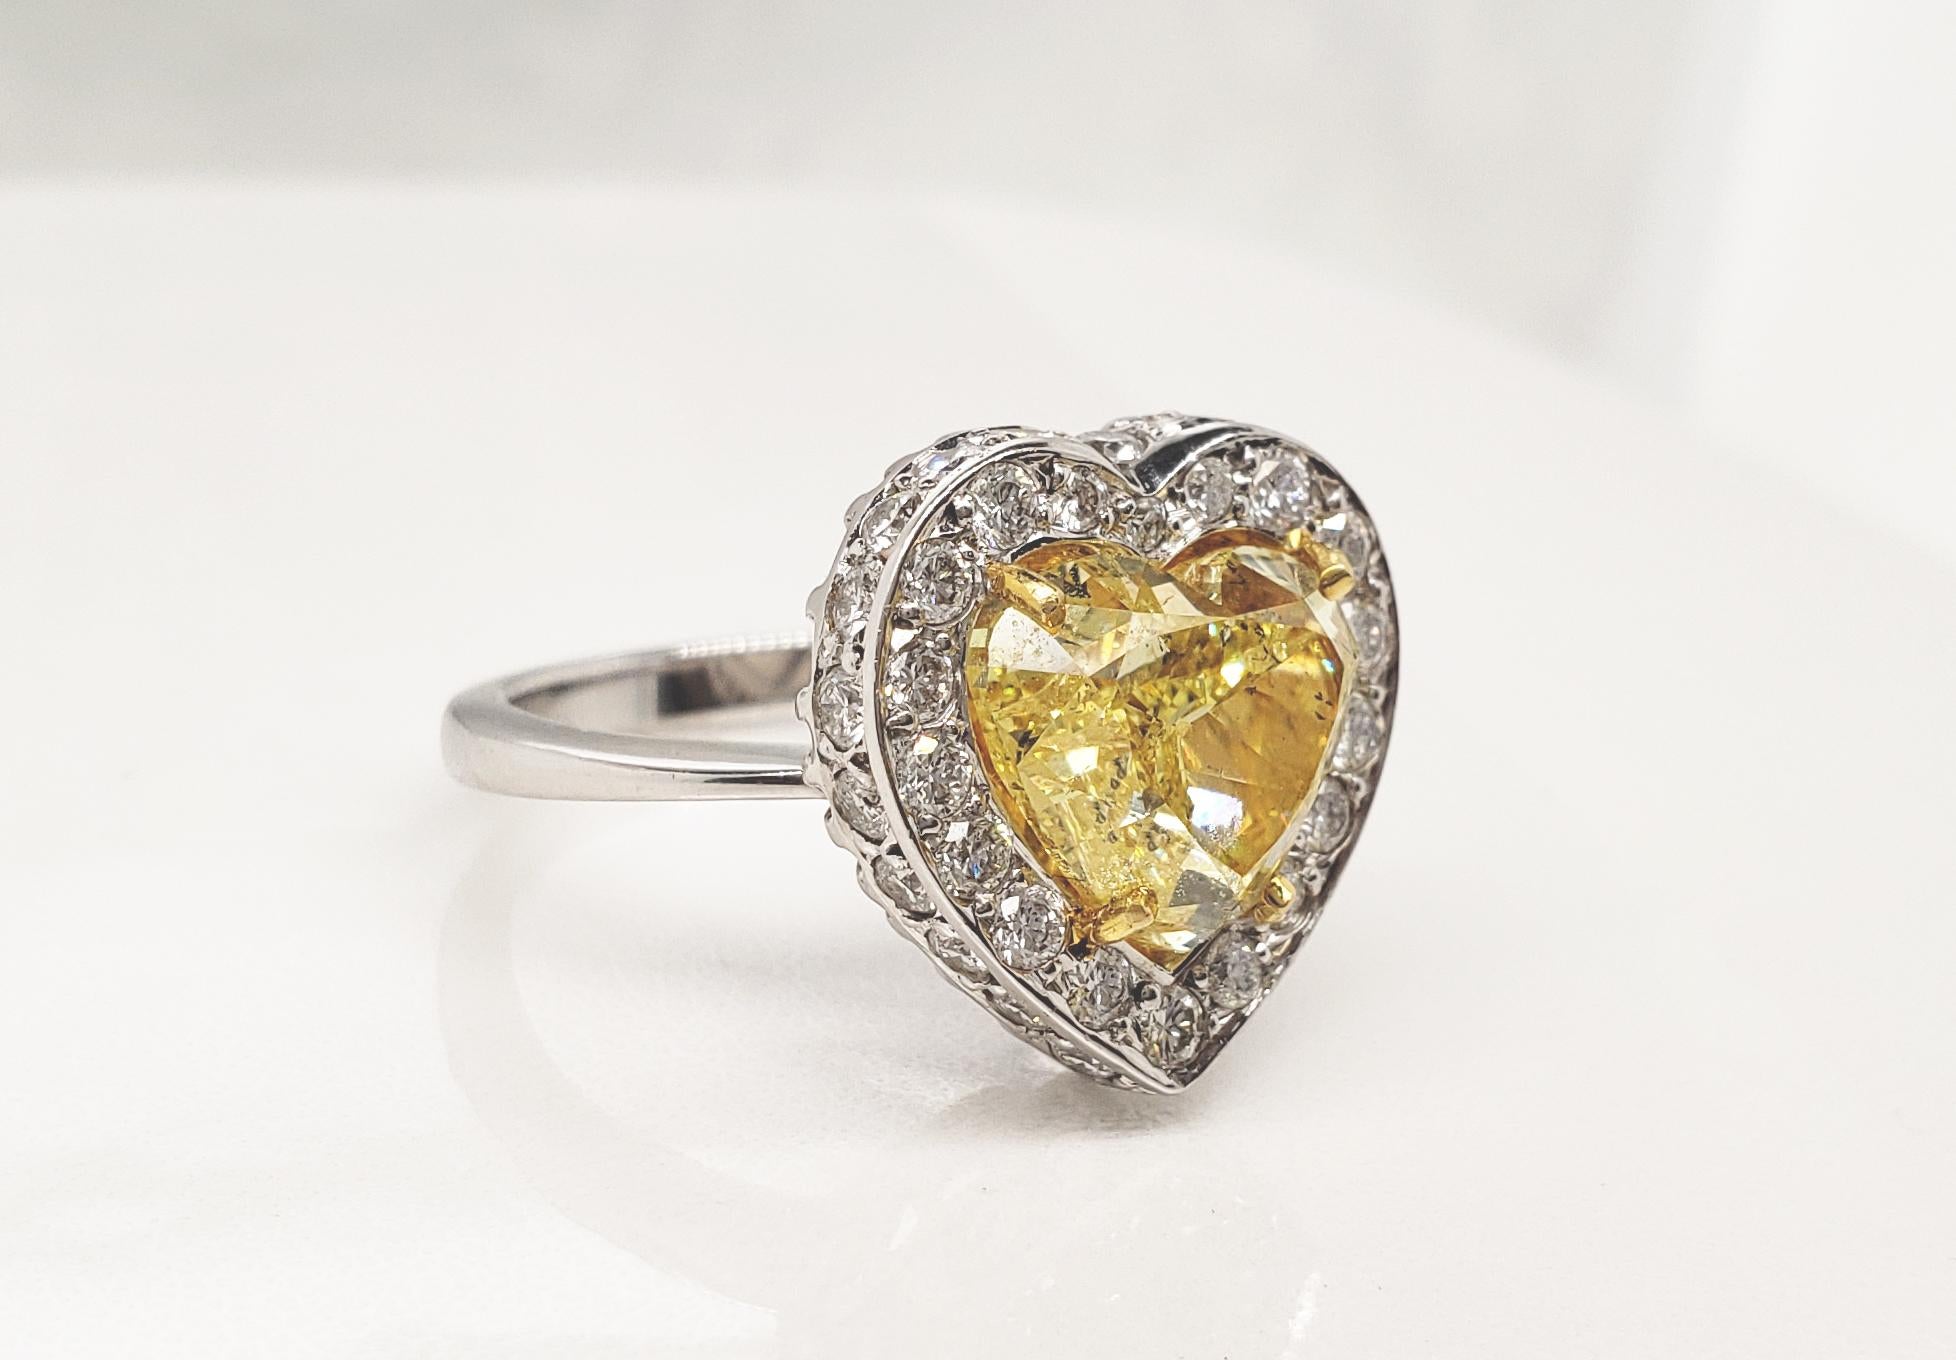 5 carat heart shaped diamond ring